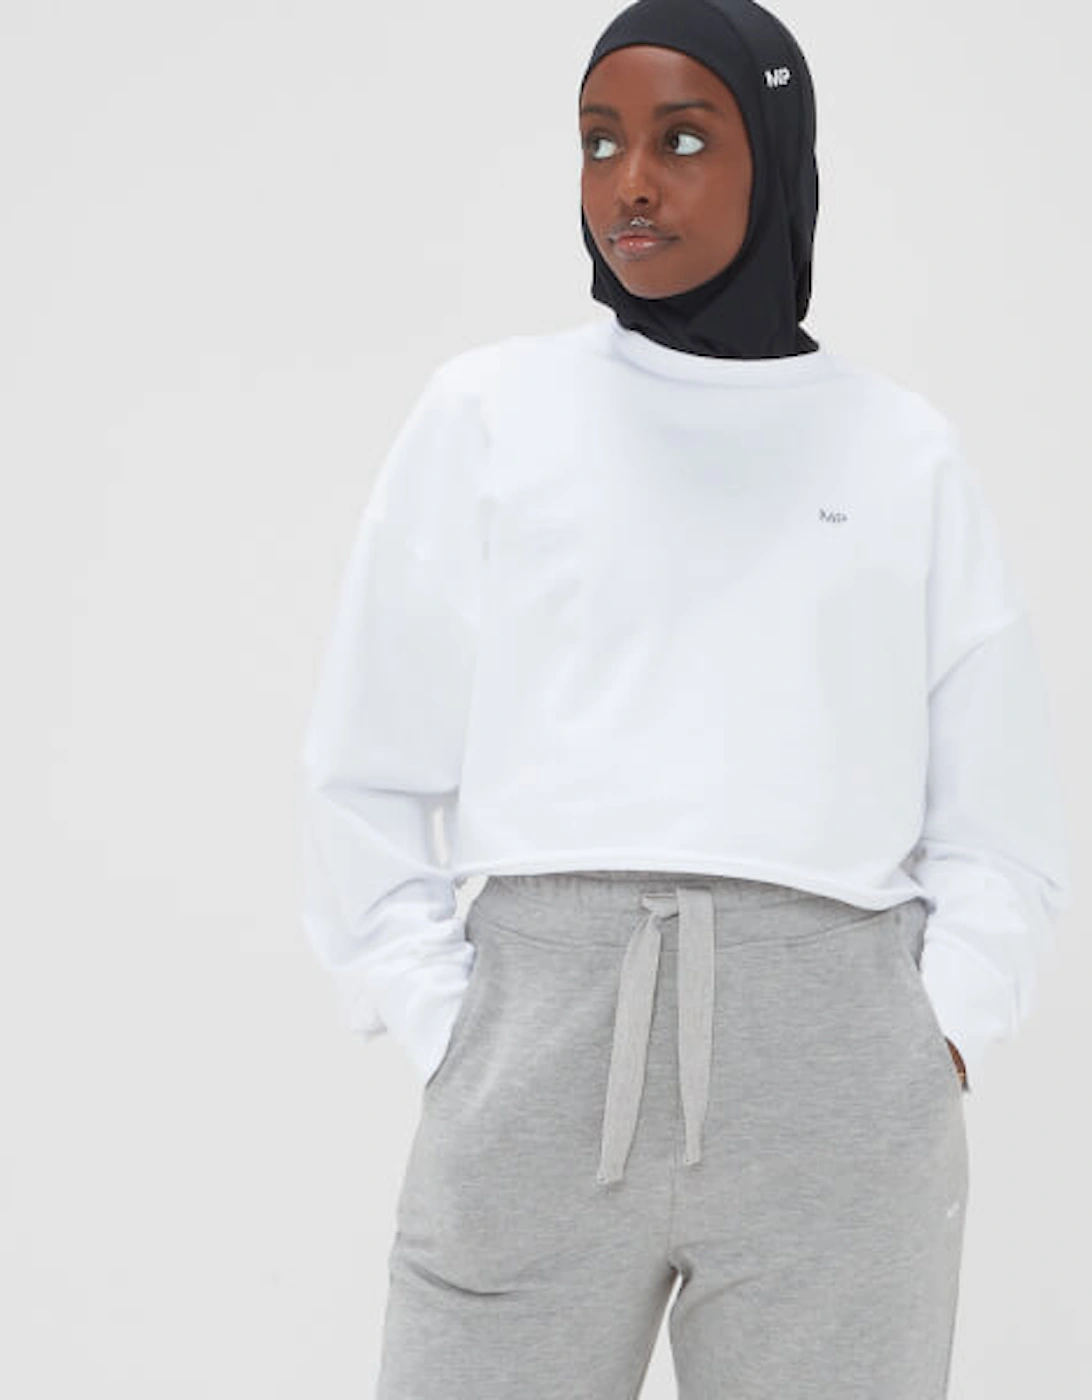 Women's Composure Cropped Sweatshirt - Grey Marl